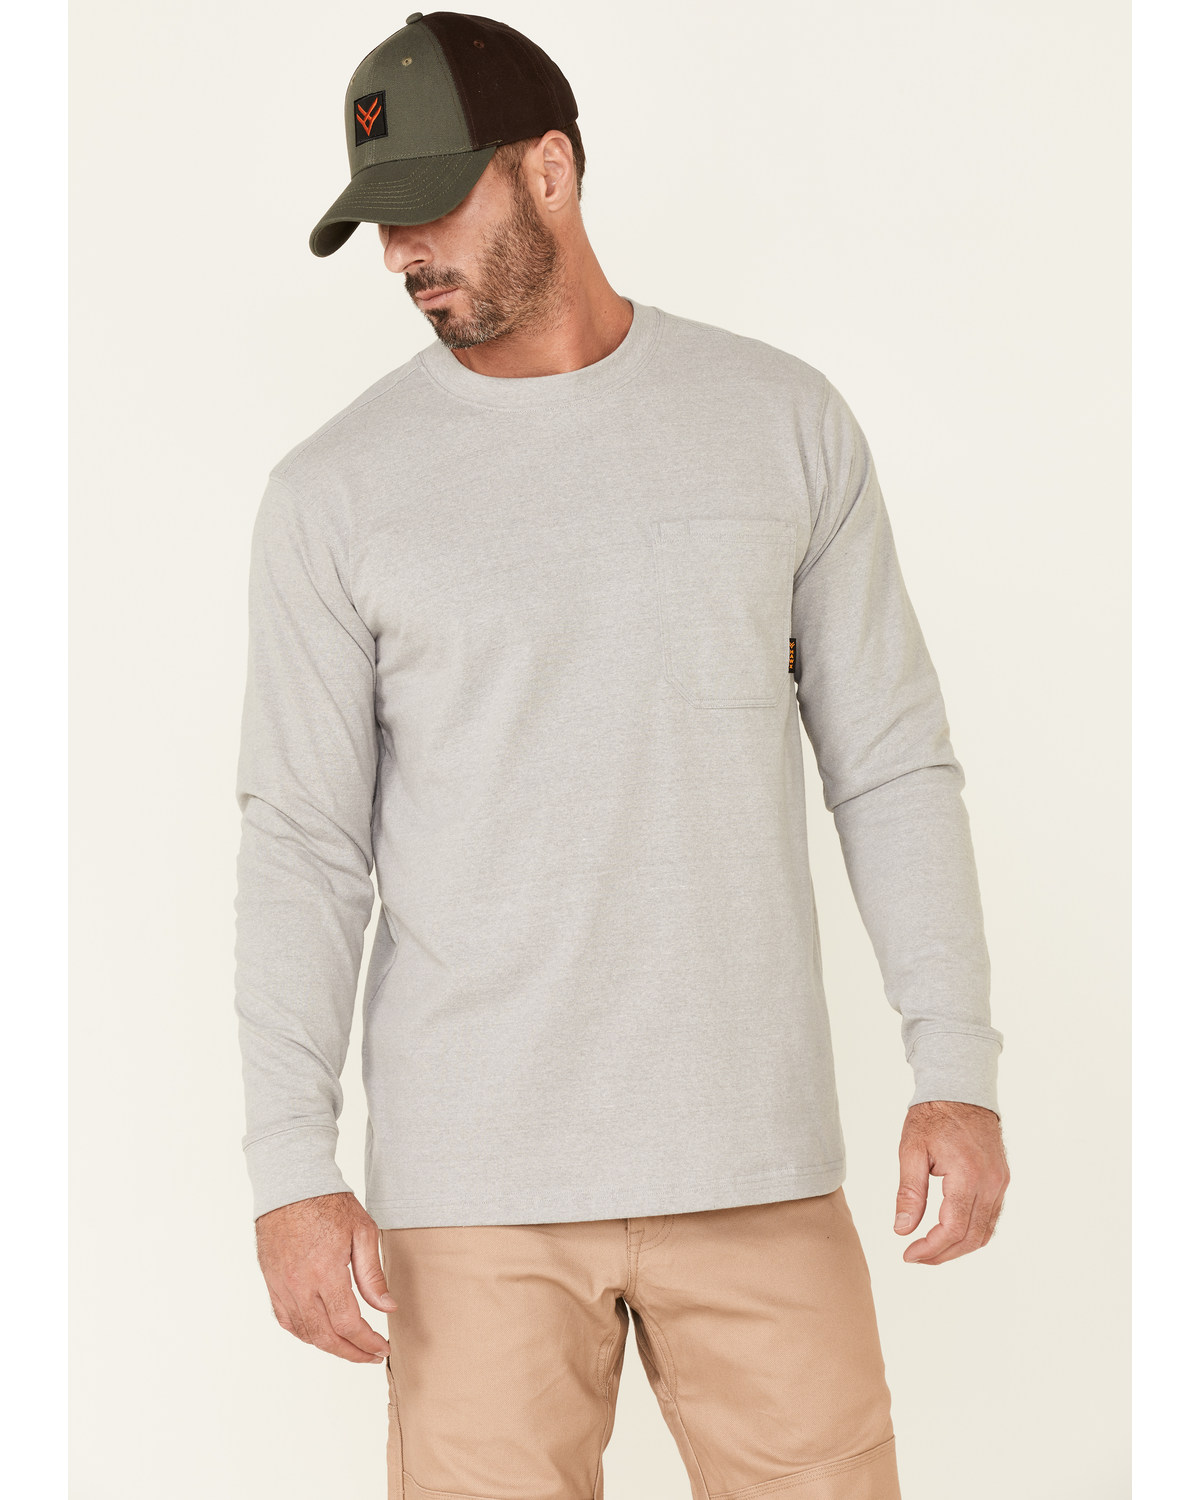 Hawx Men's Solid Light Gray Forge Long Sleeve Work Pocket T-Shirt